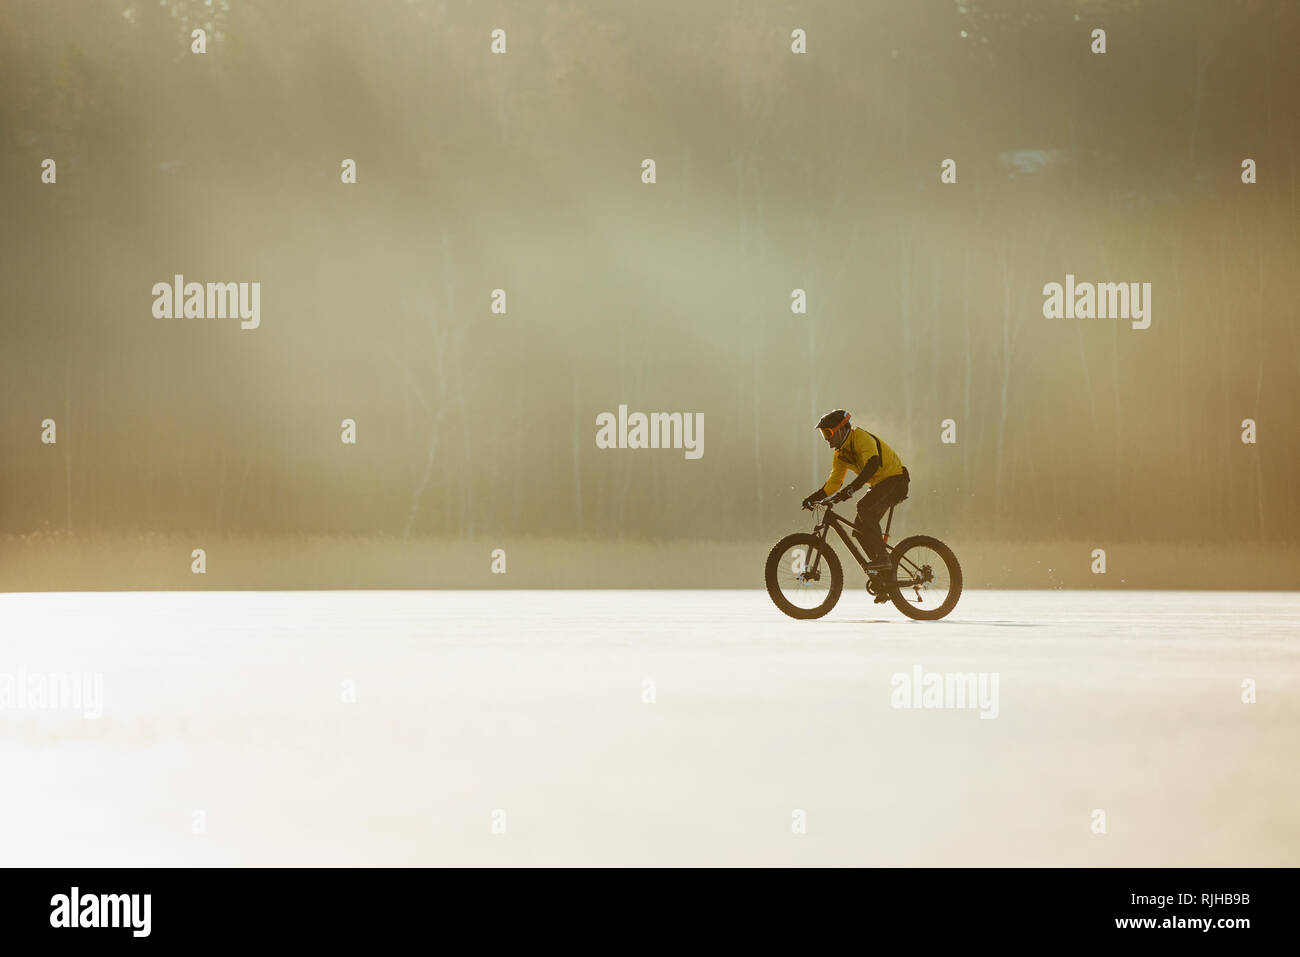 Man cycling on a frozen lake Stock Photo